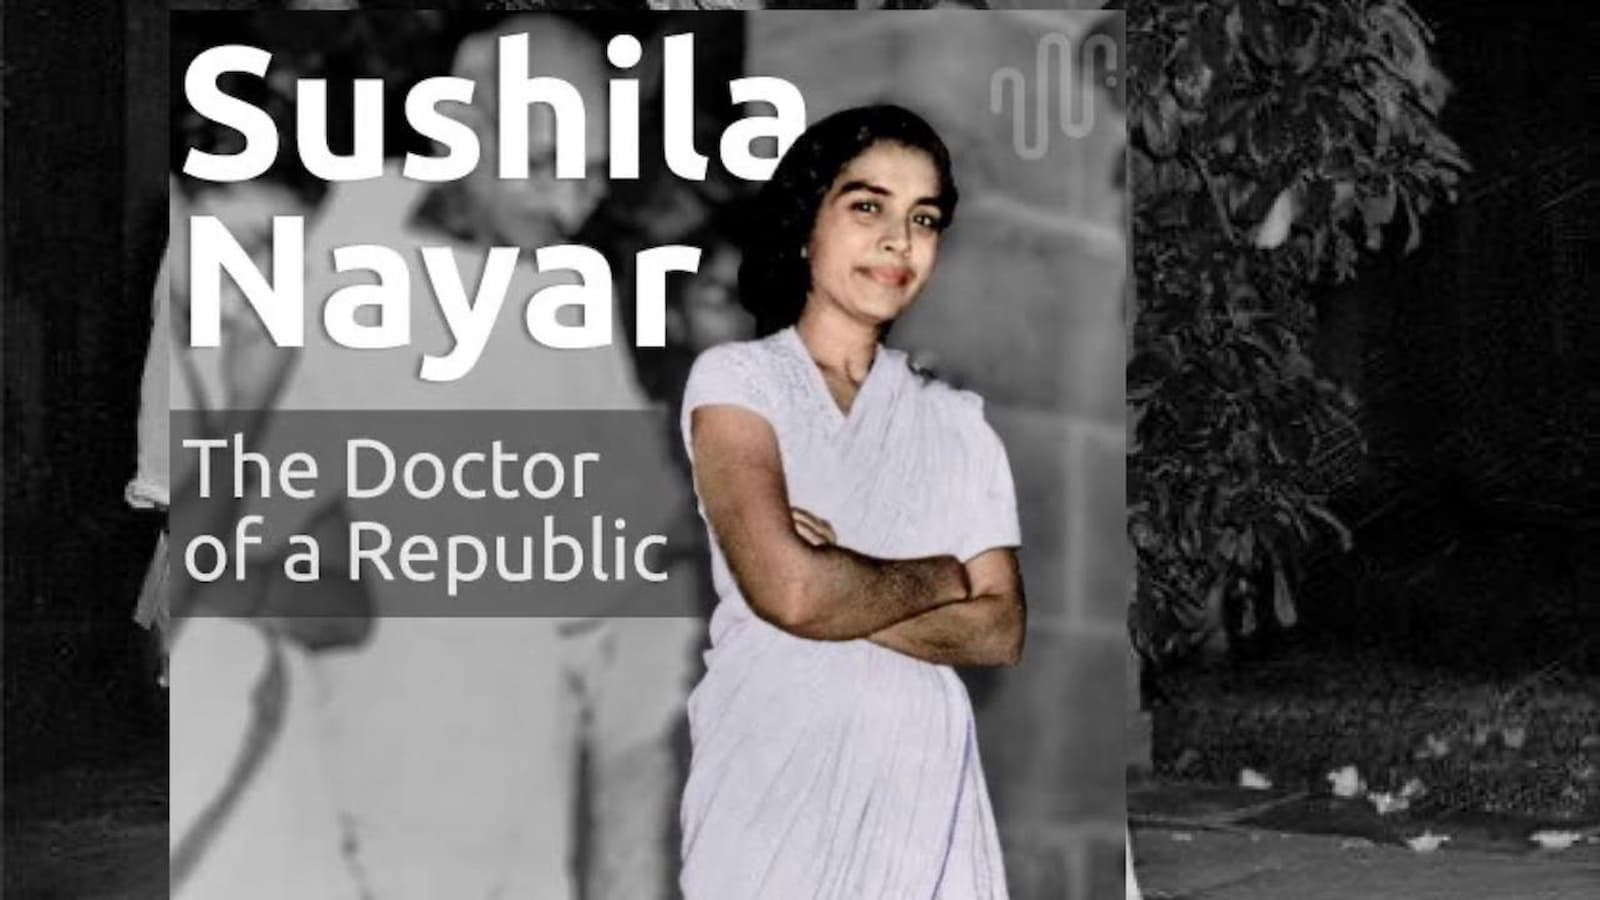 Gandhi's Doctor, Sushila Nayar